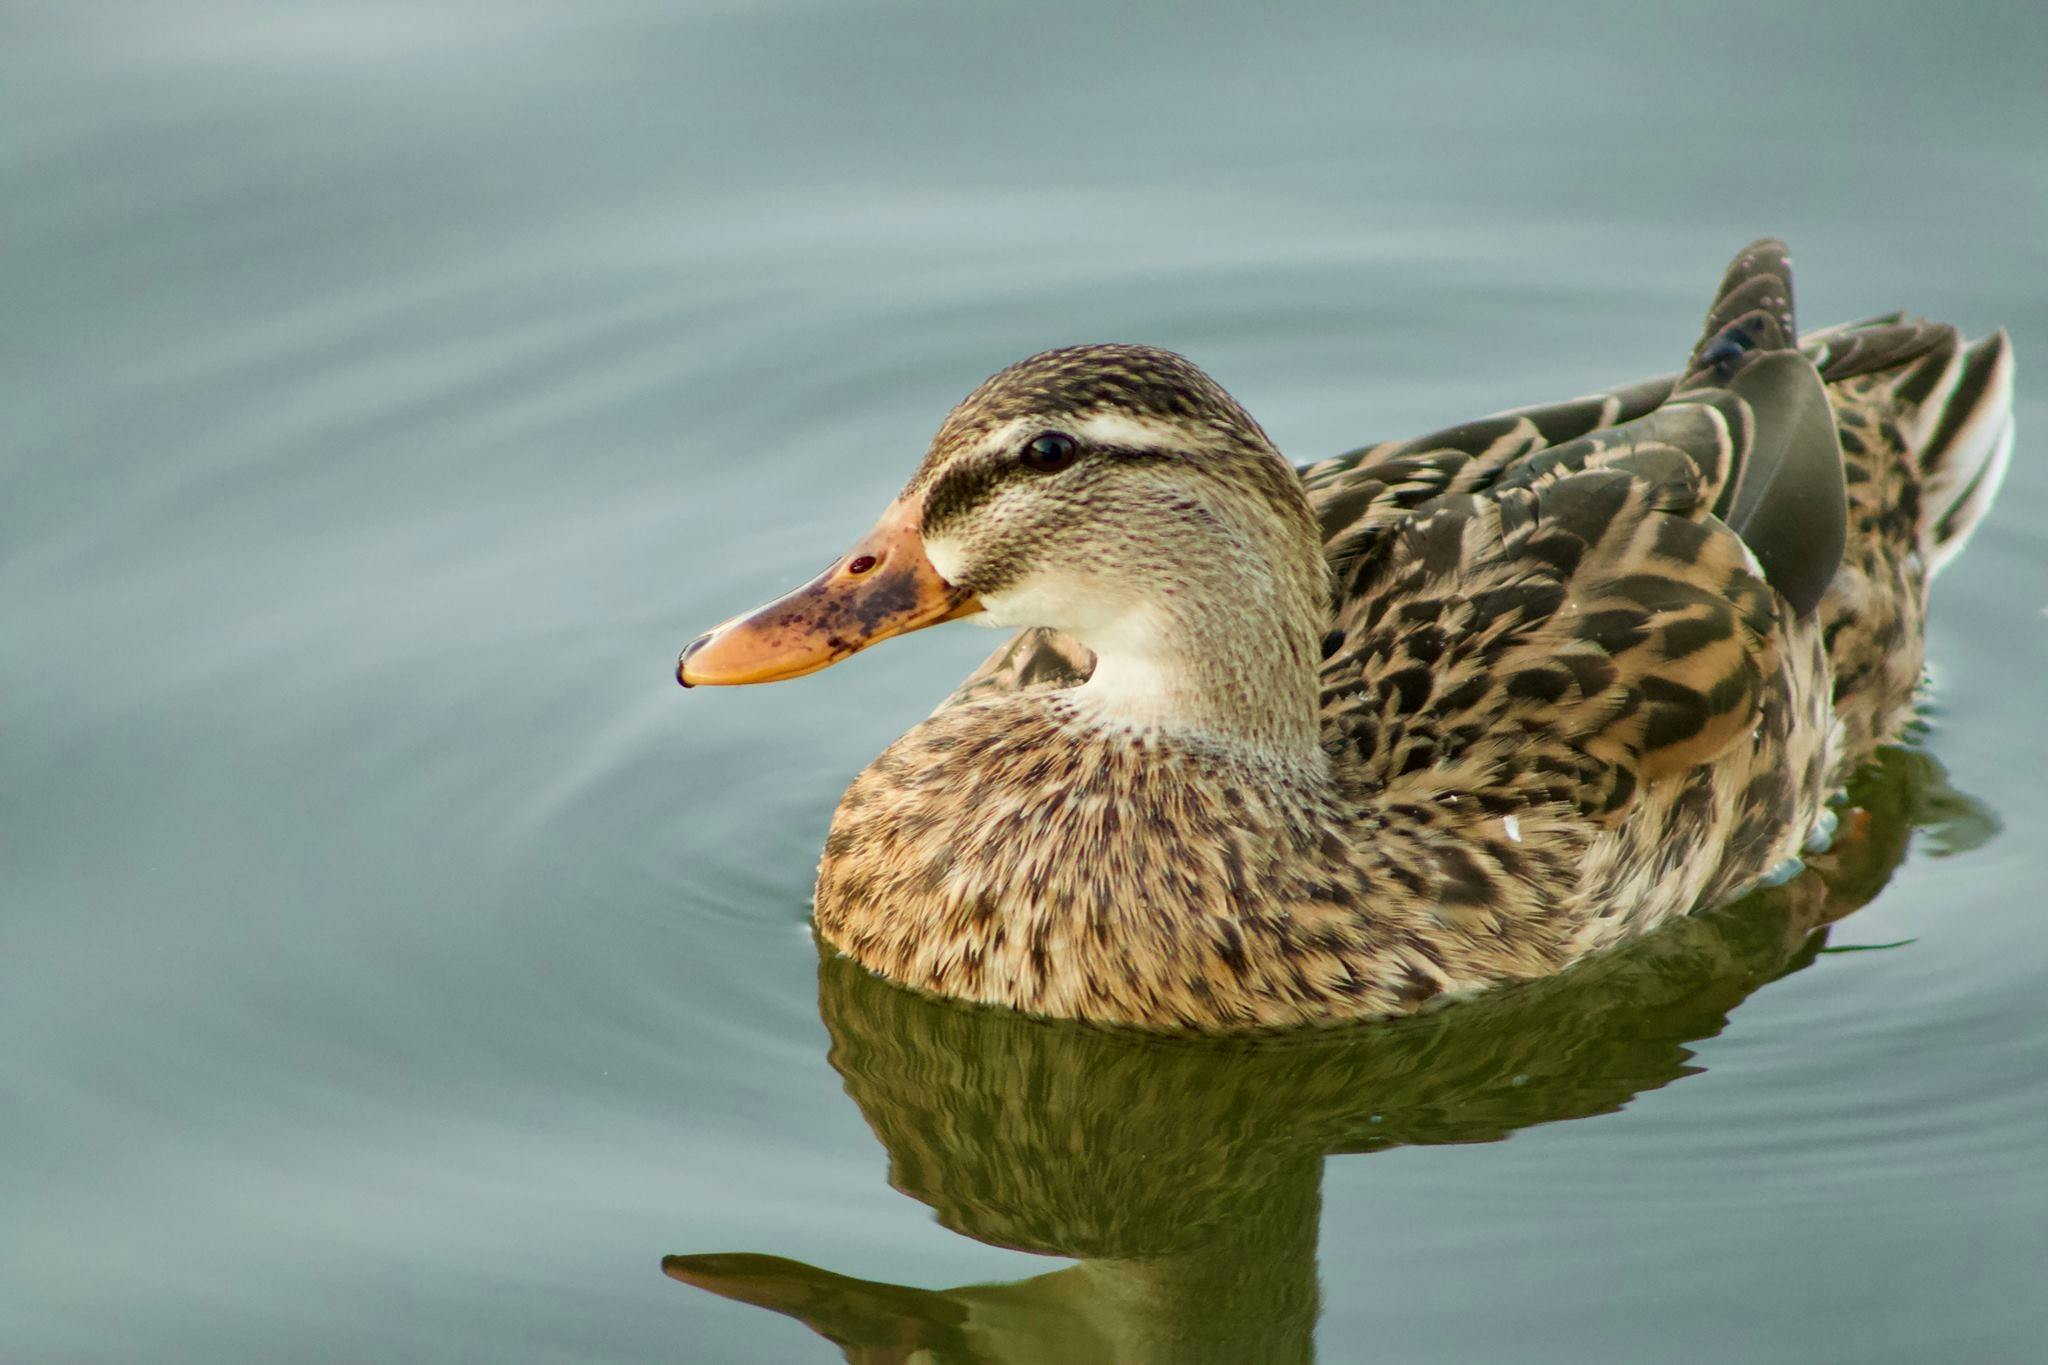 Free stock photo of bird, duck, lake